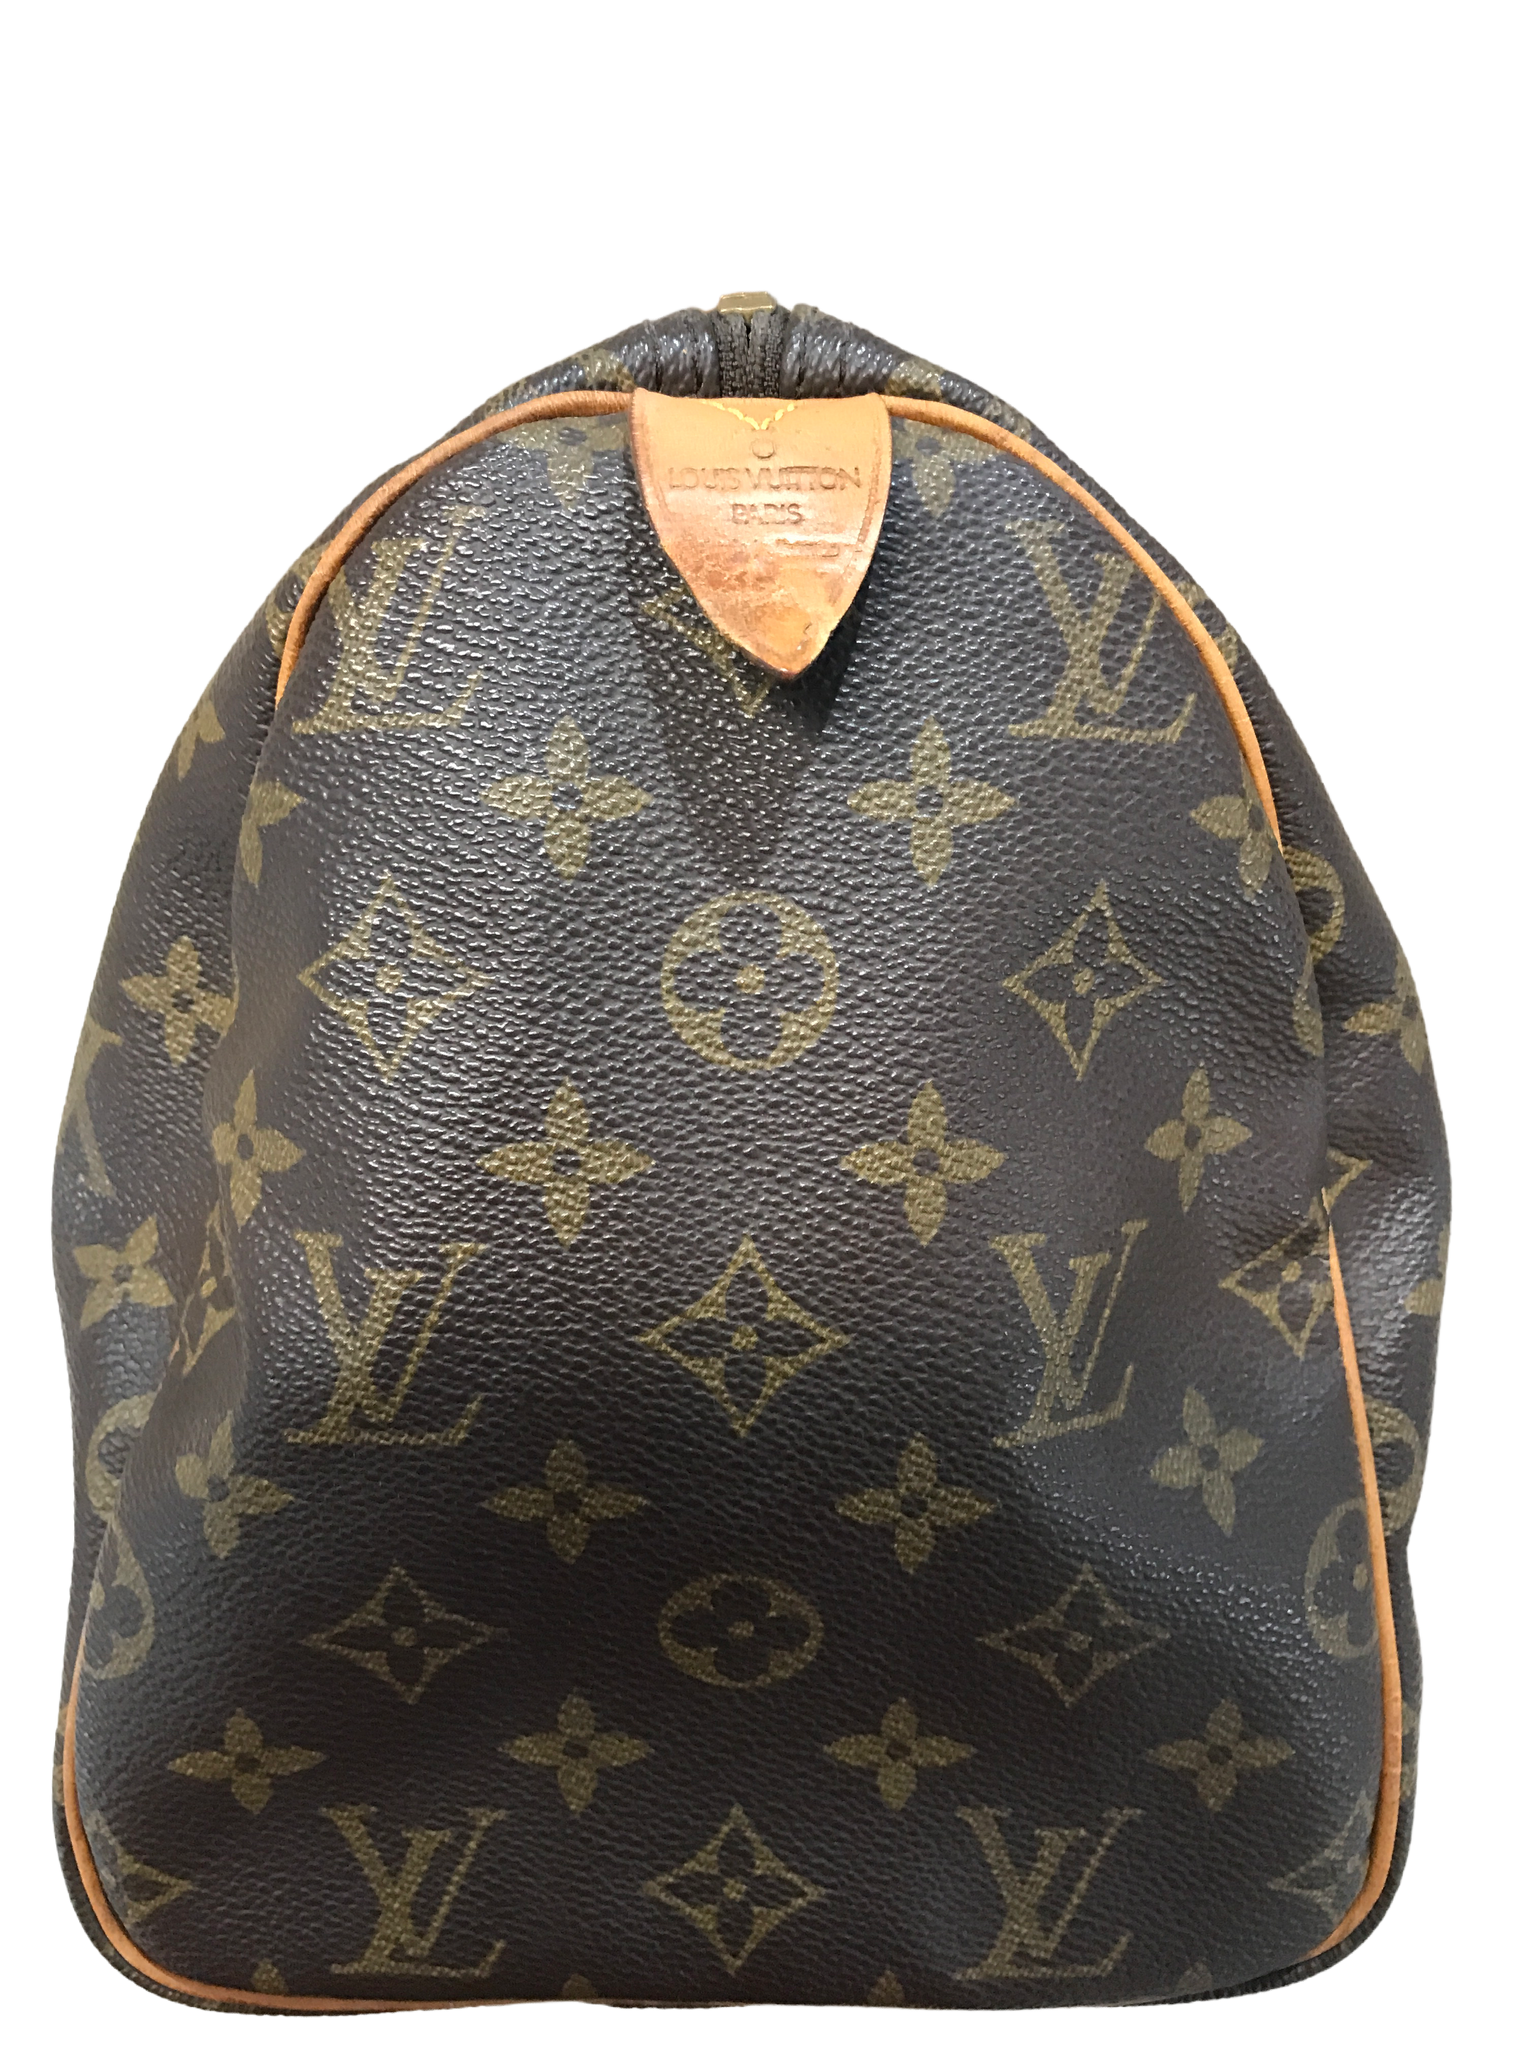 Speedy 30 Monogram - Women - Handbags